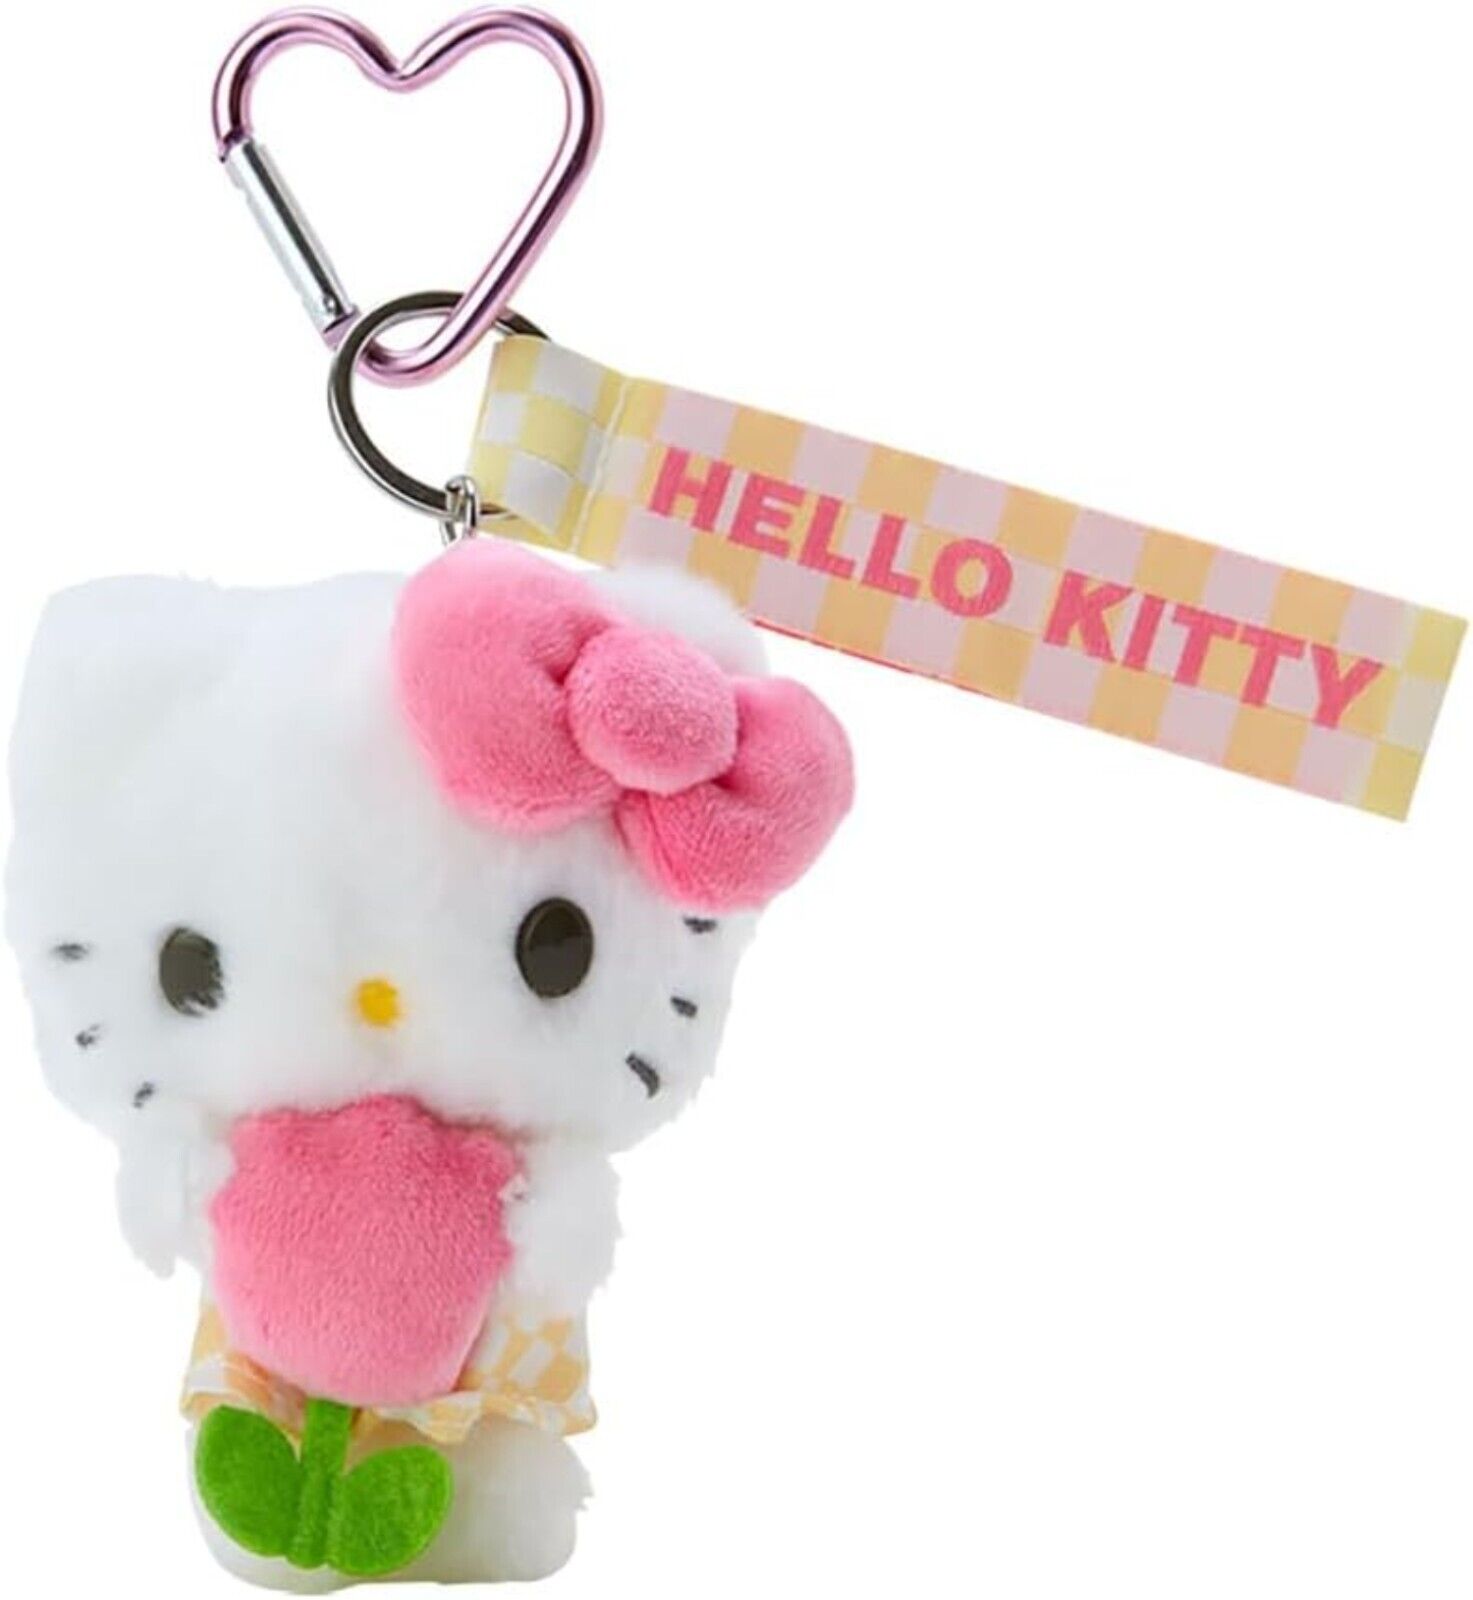 Sanrio Character Hello Kitty Mascot Holder (Pastel Checker) Plush Doll New Japan